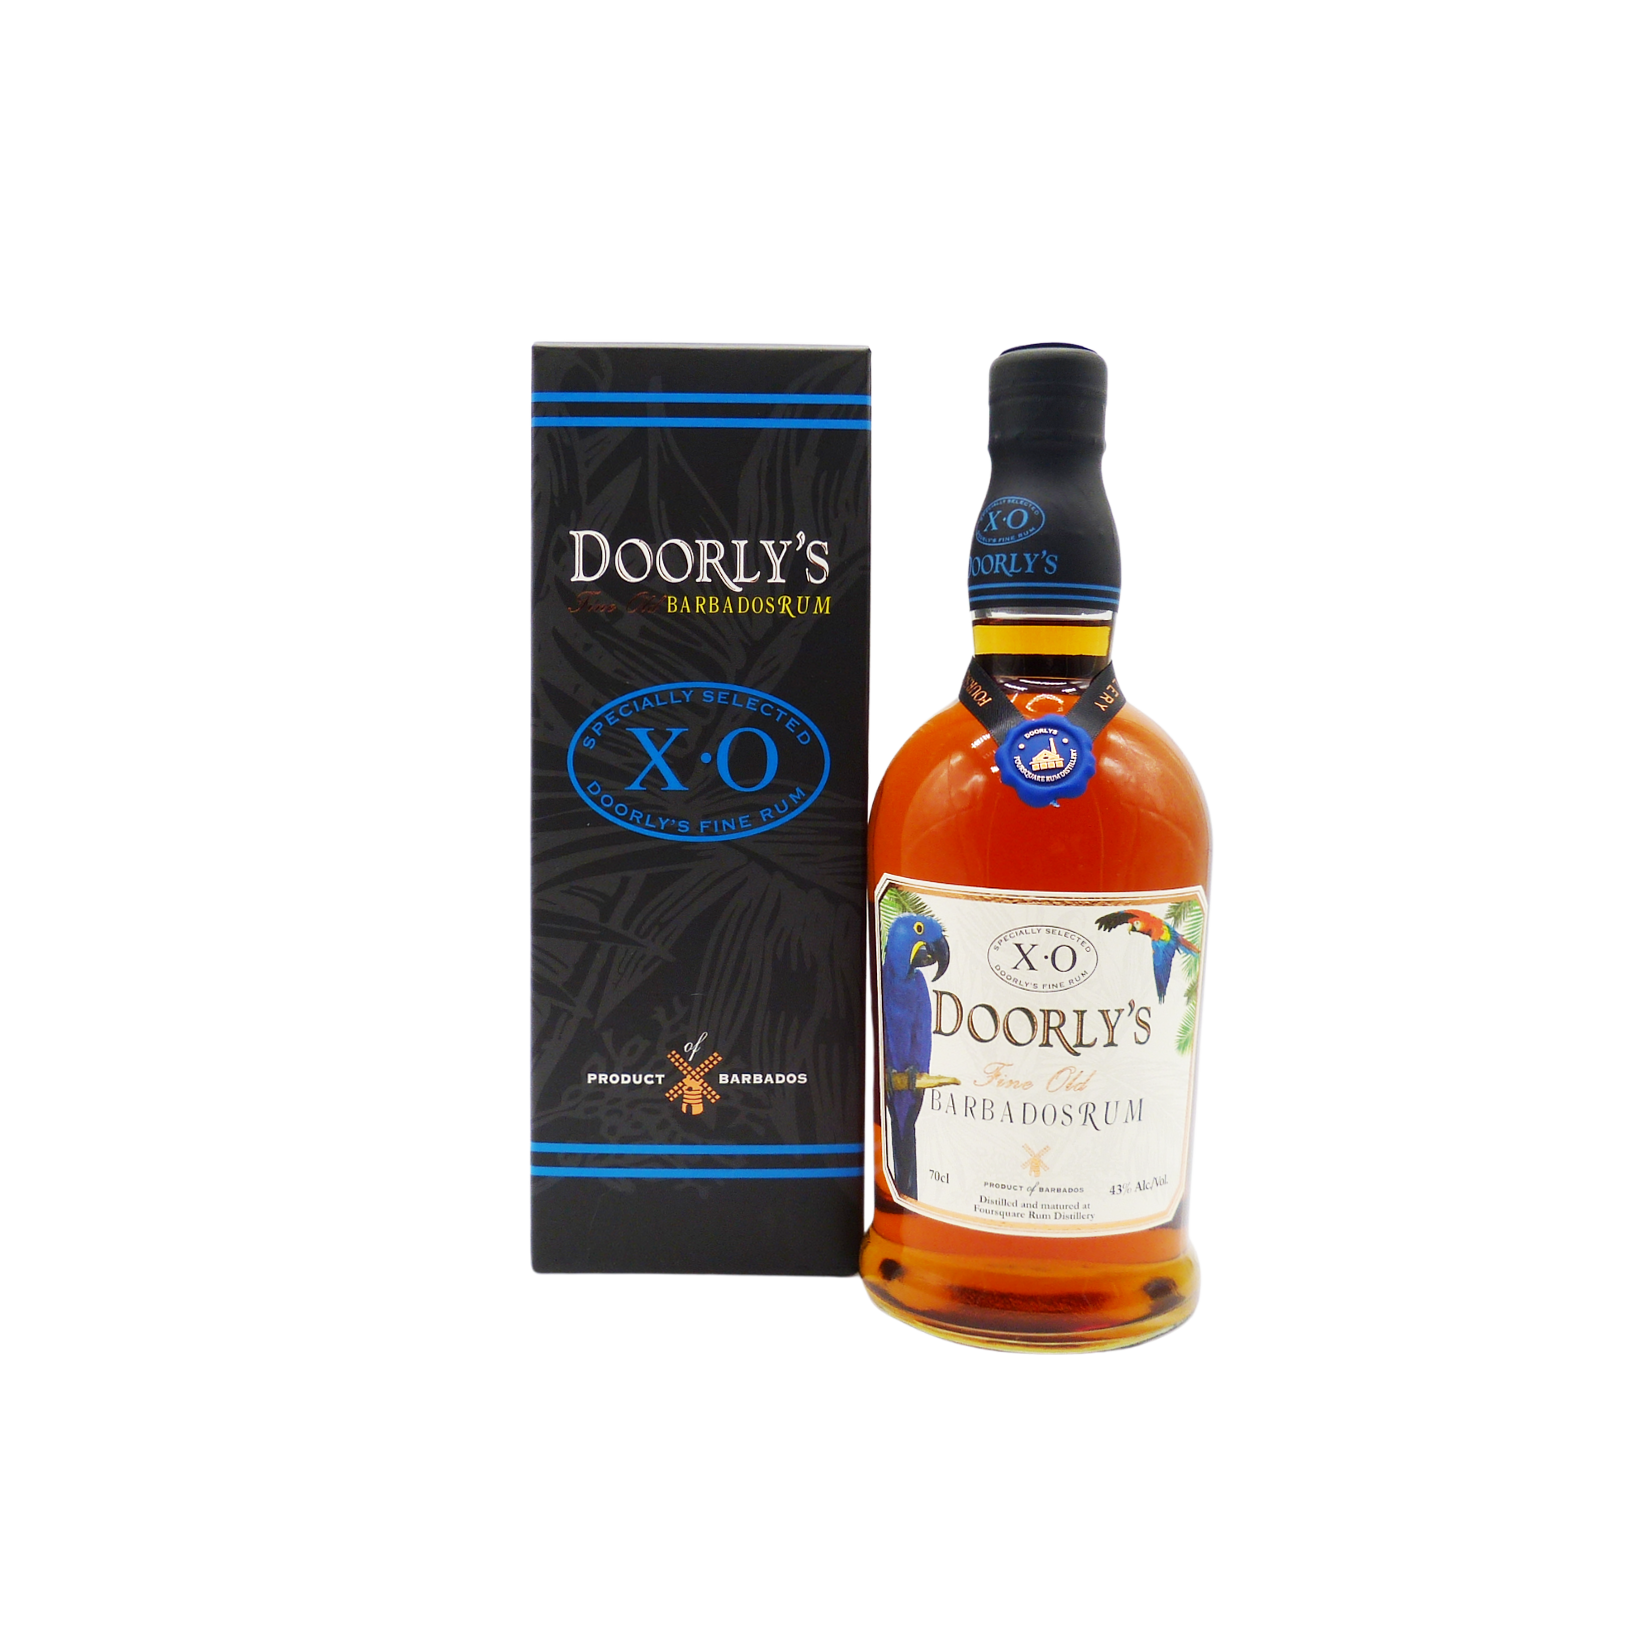 Doorly's XO Barbados Rum, 43% vol.